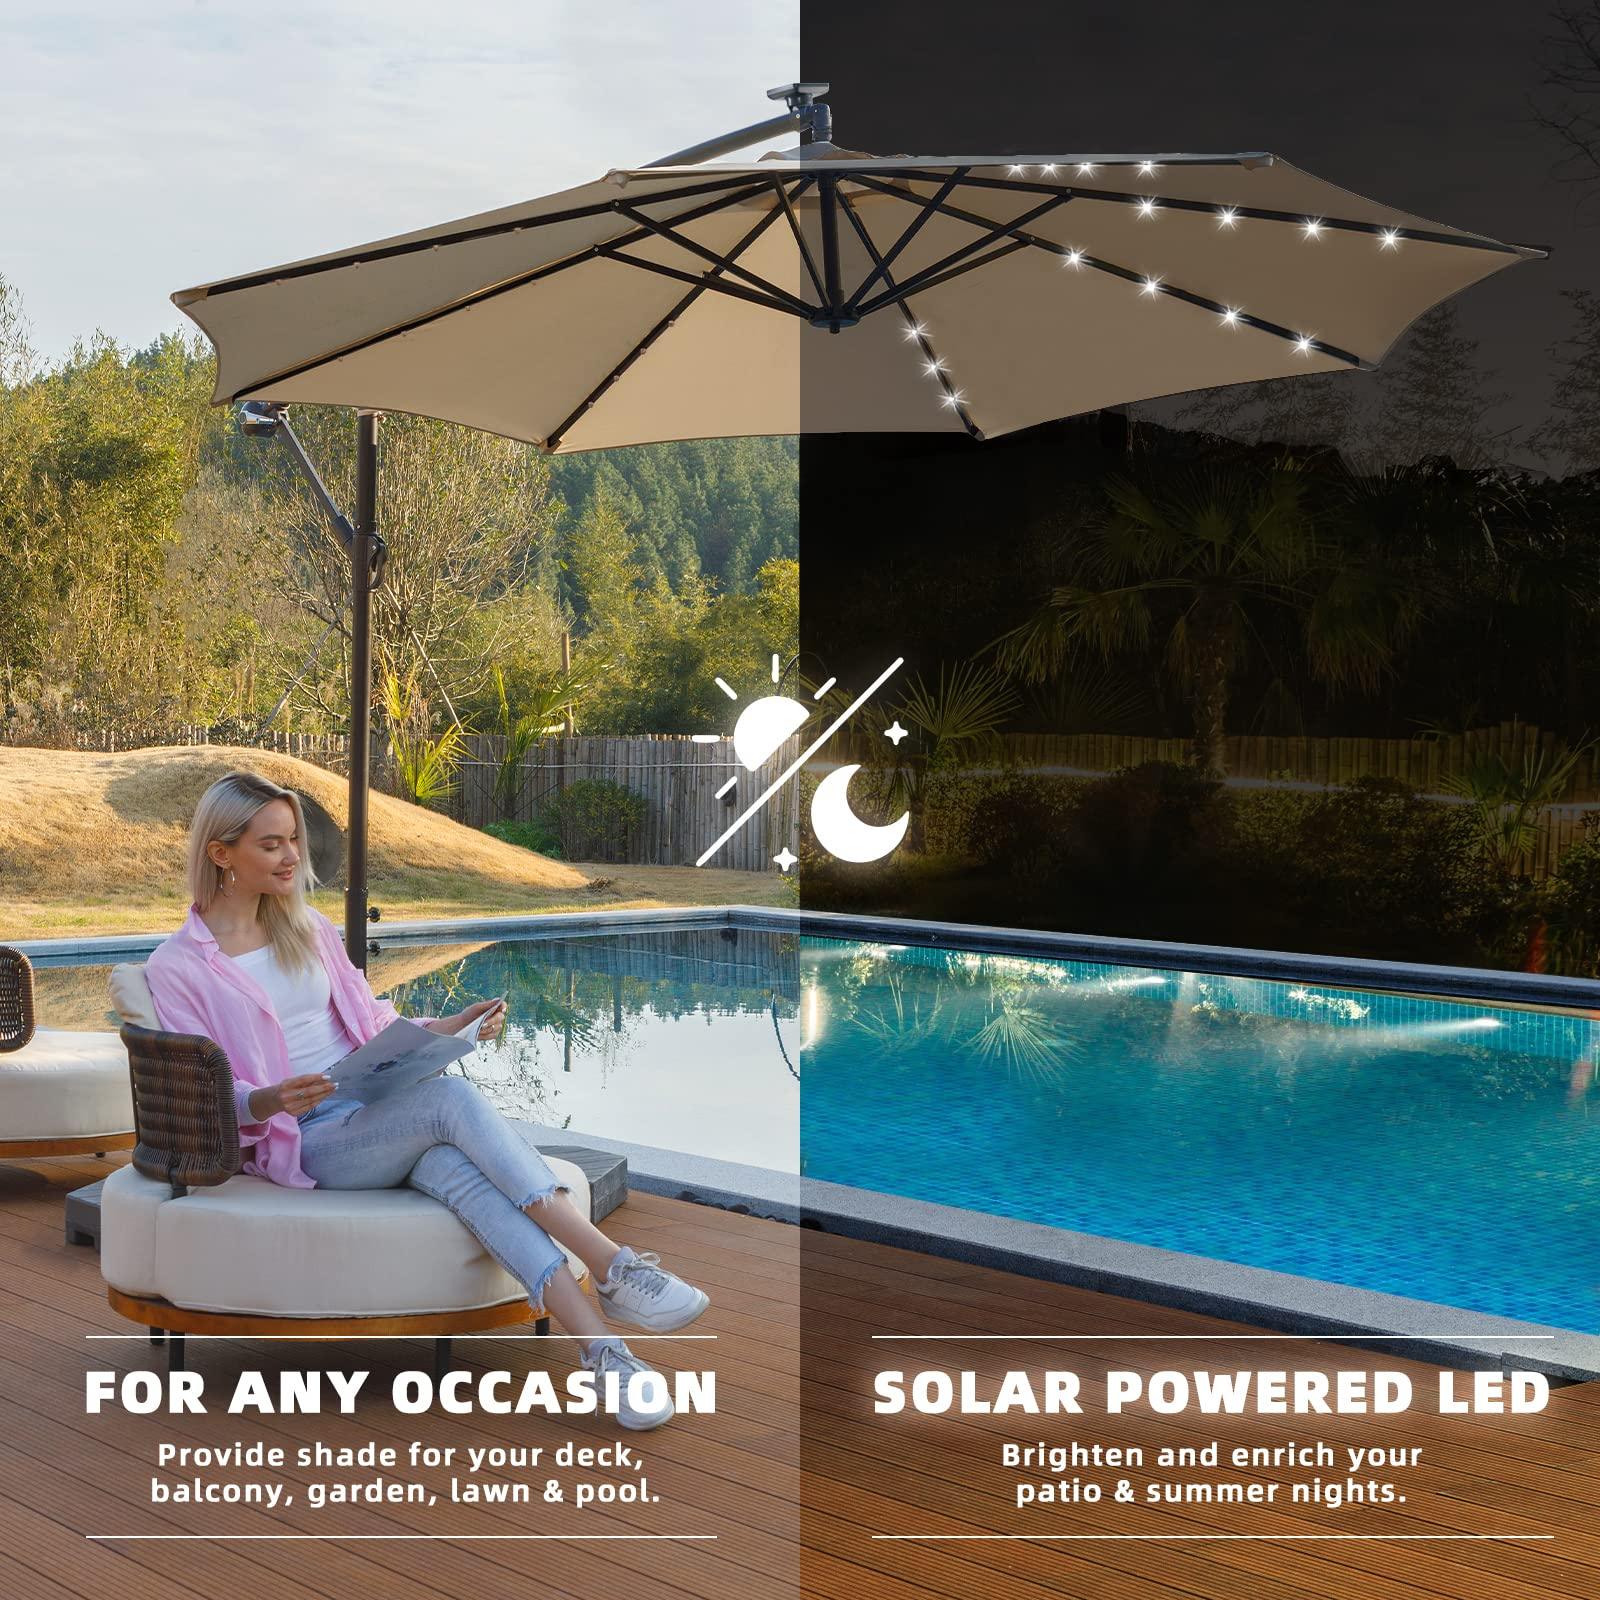 wikiwiki 10ft Solar LED Offset Hanging Market Patio Umbrella for Backyard, Poolside, Lawn and Garden,Easy Tilt Adjustment, Polyester Shade & Cross Base(Beige) - CookCave